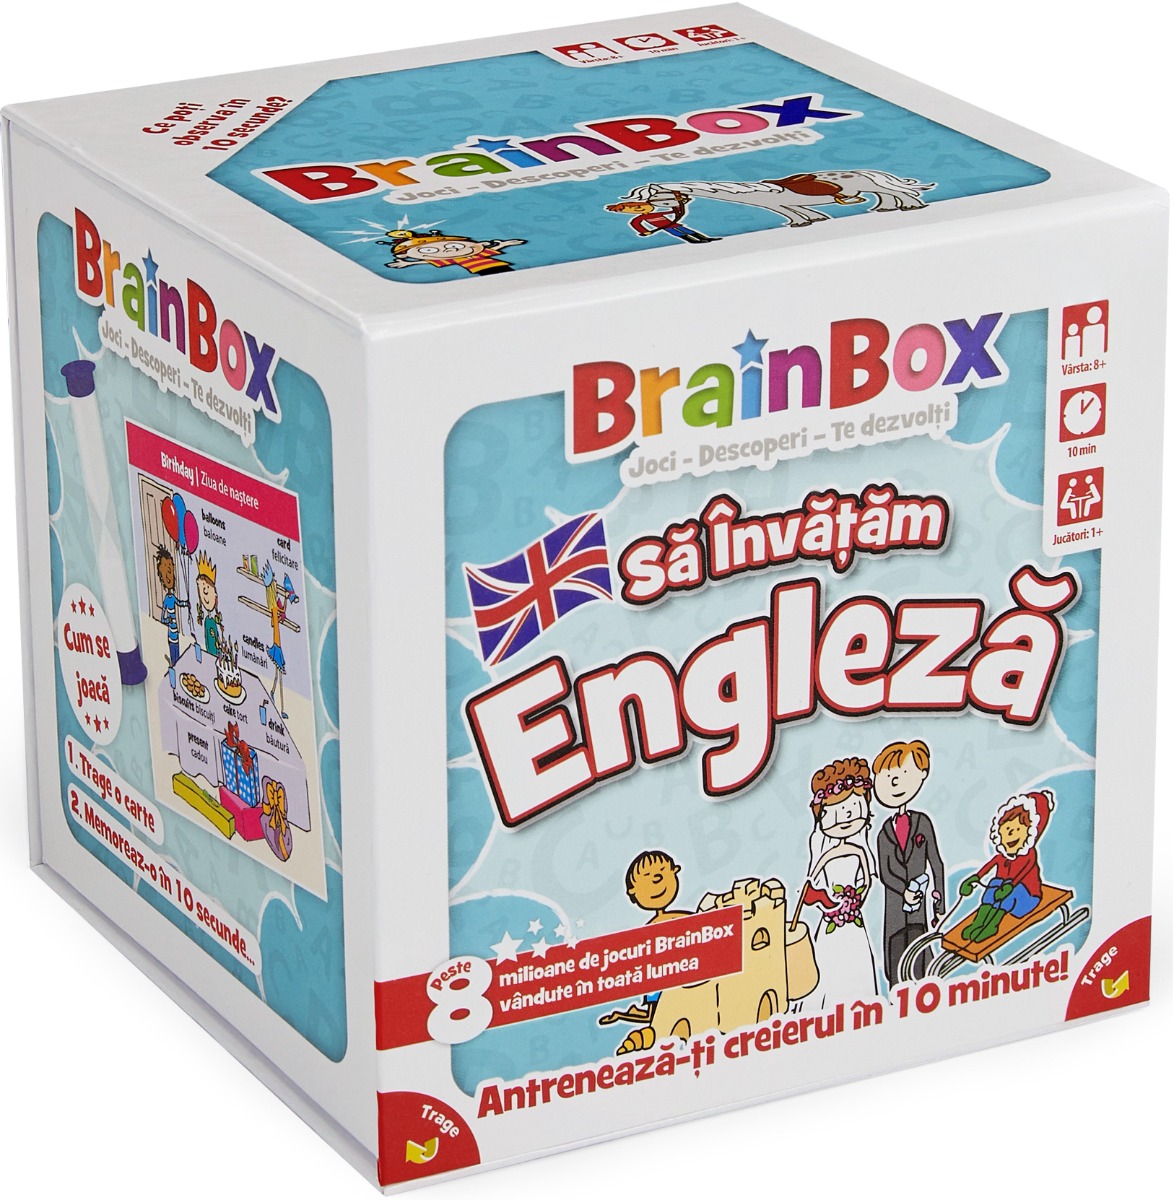 Brainbox. Sa invatam engleza